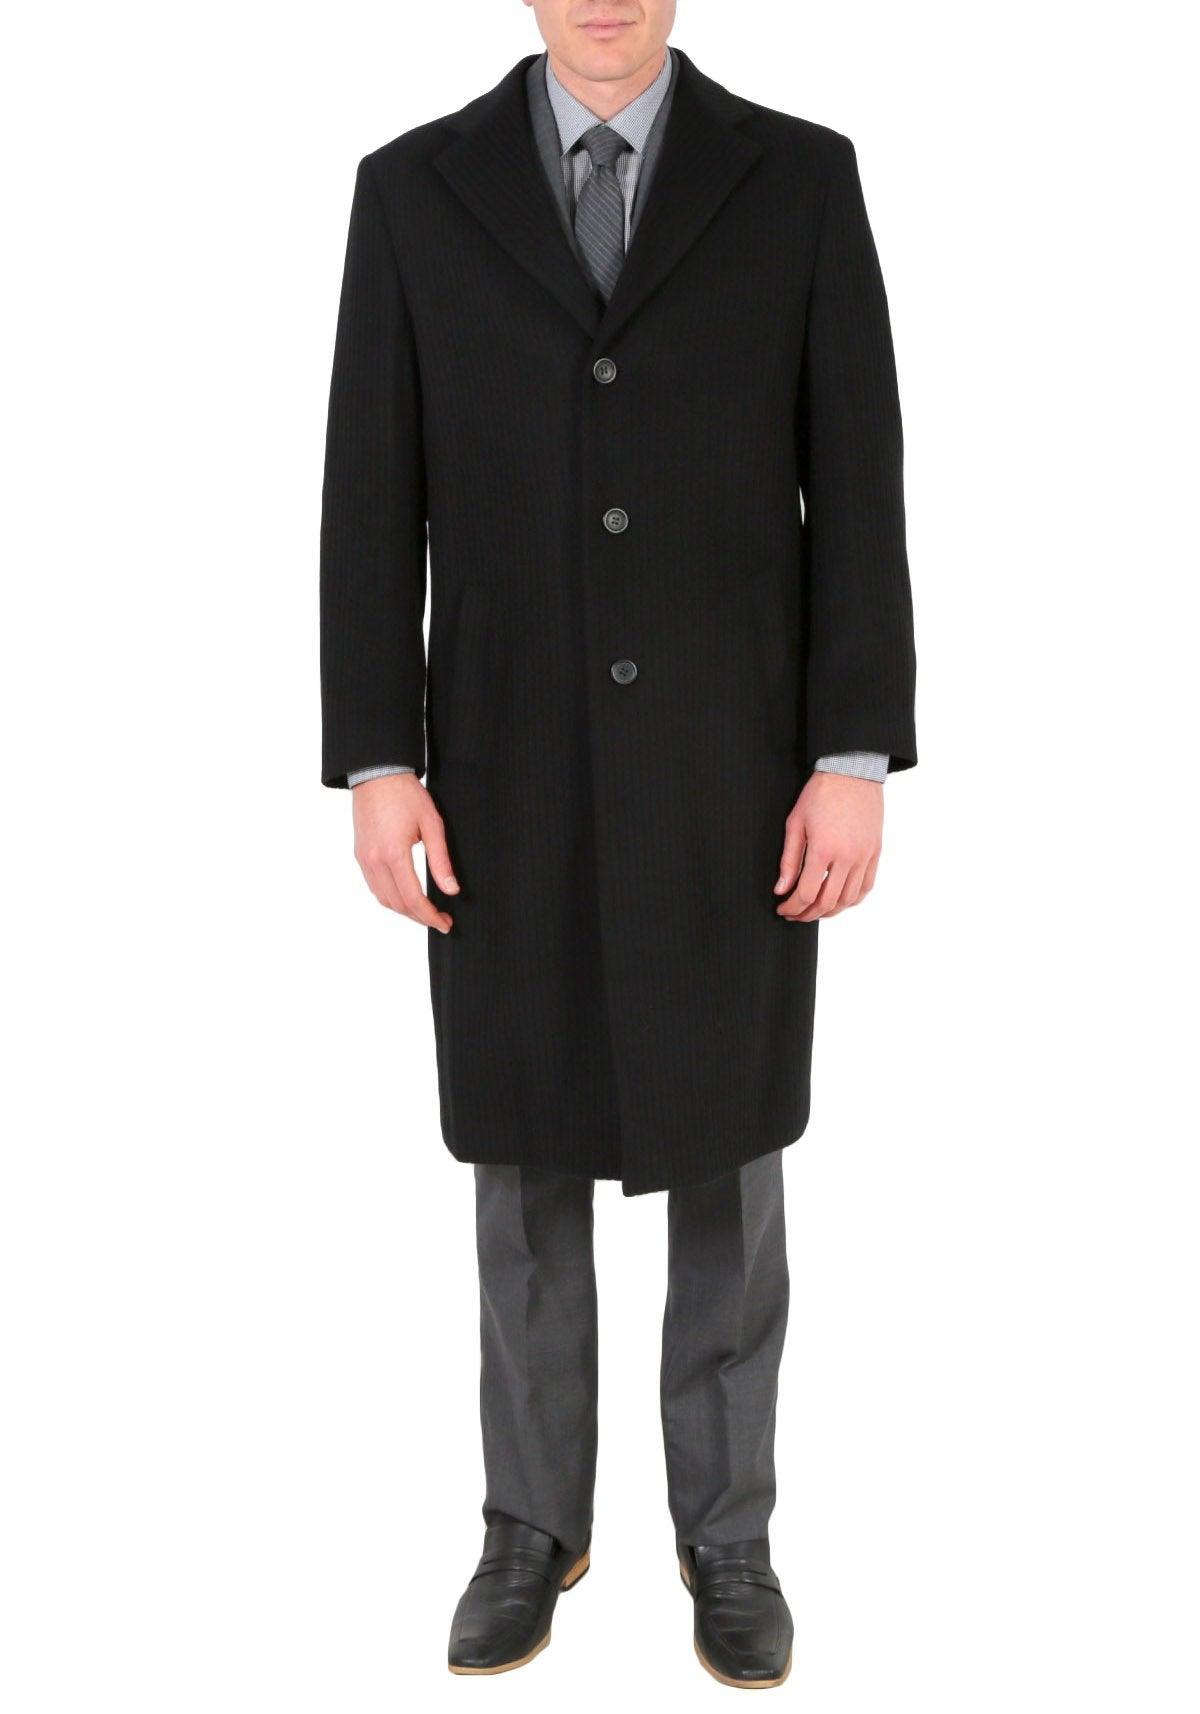 Creed Men's Wool Black Tone Stripe Top Coat